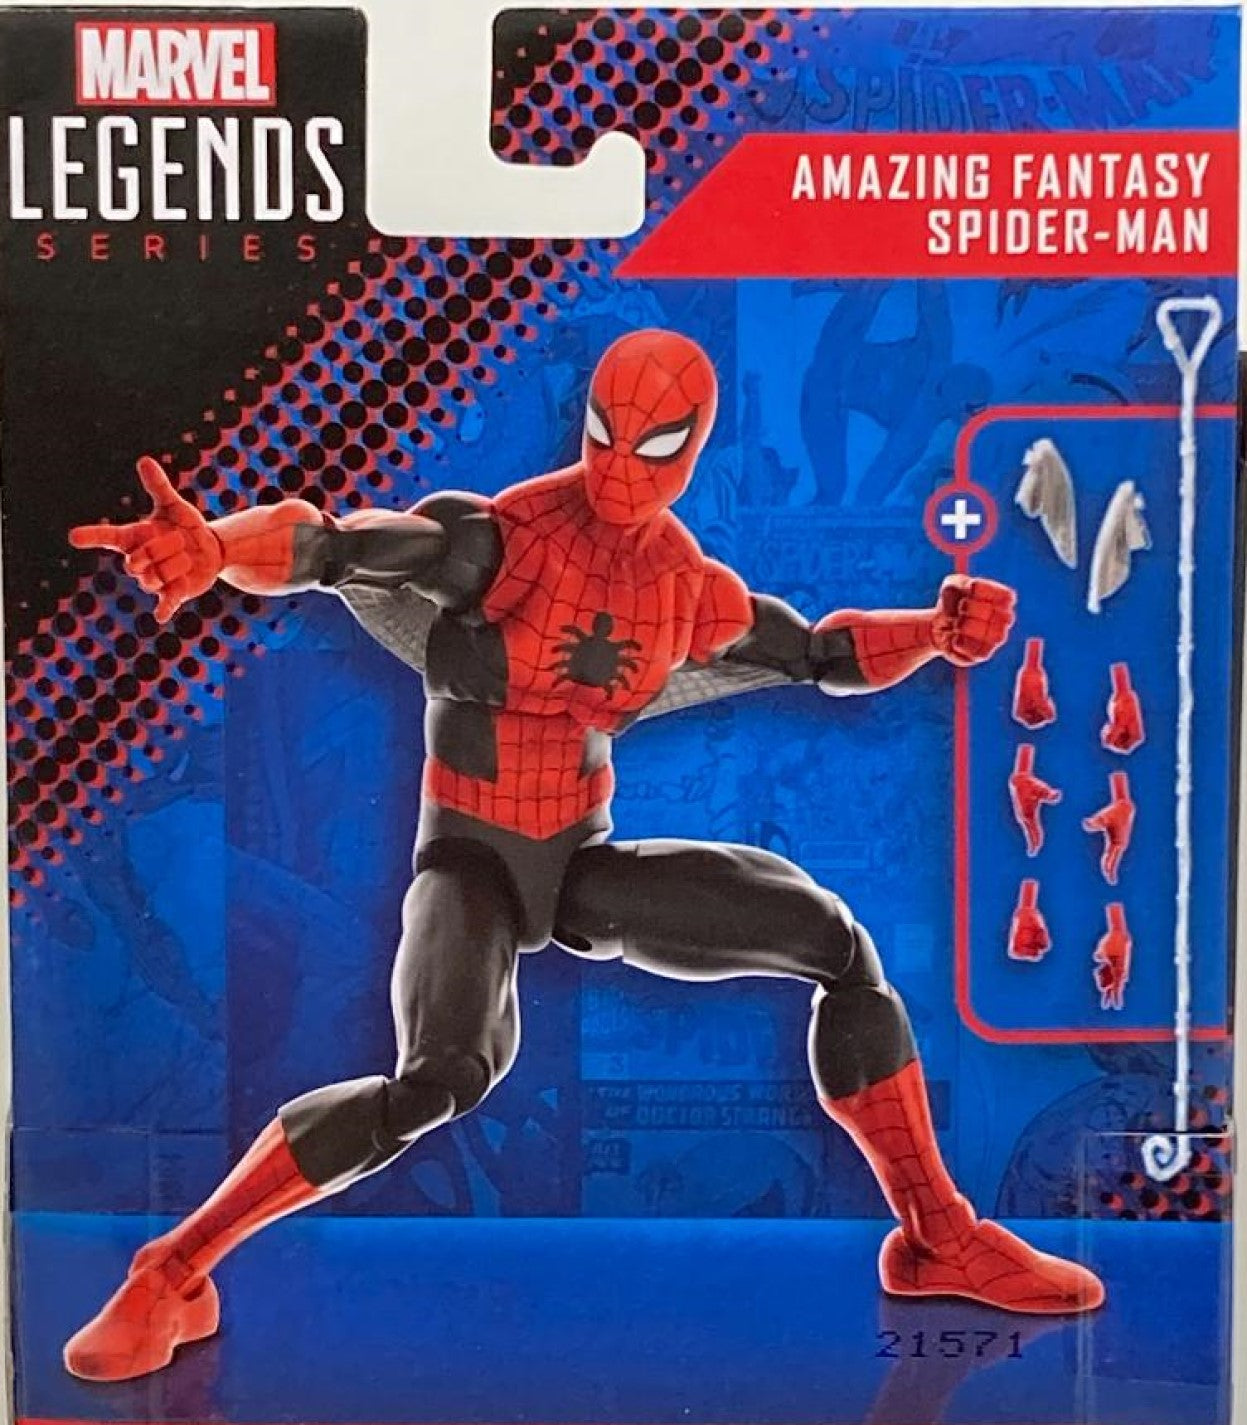 Marvel Legends: Amazing Fantasy Spider-Man